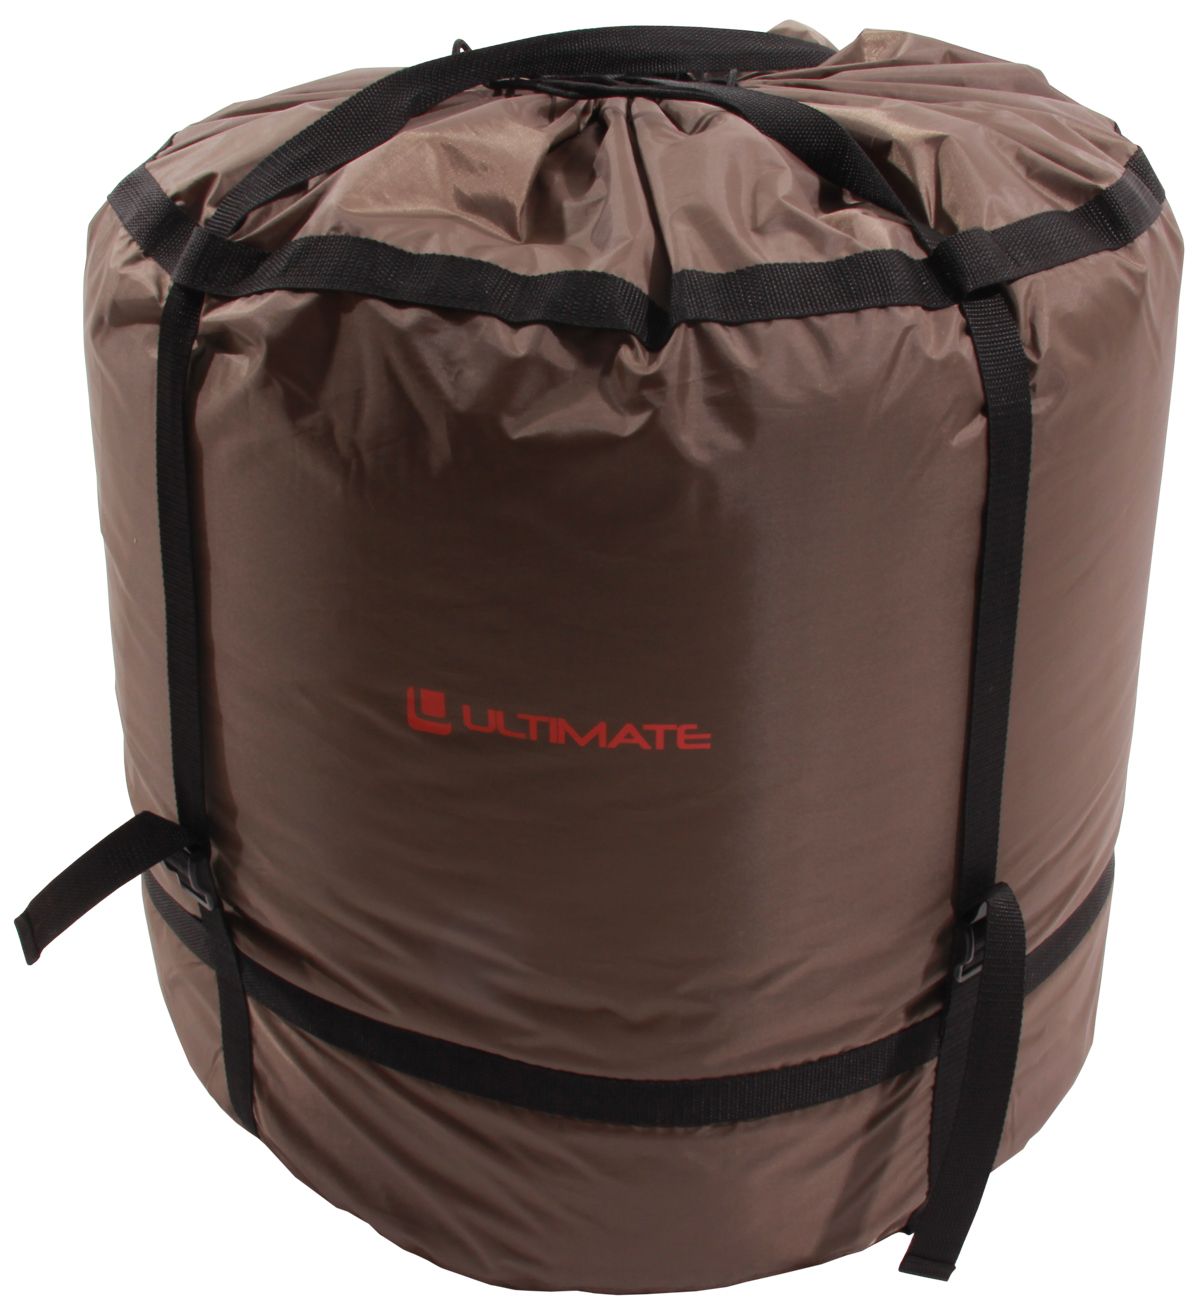 Ultimate 5 Season Dual Layer Sleeping Bag